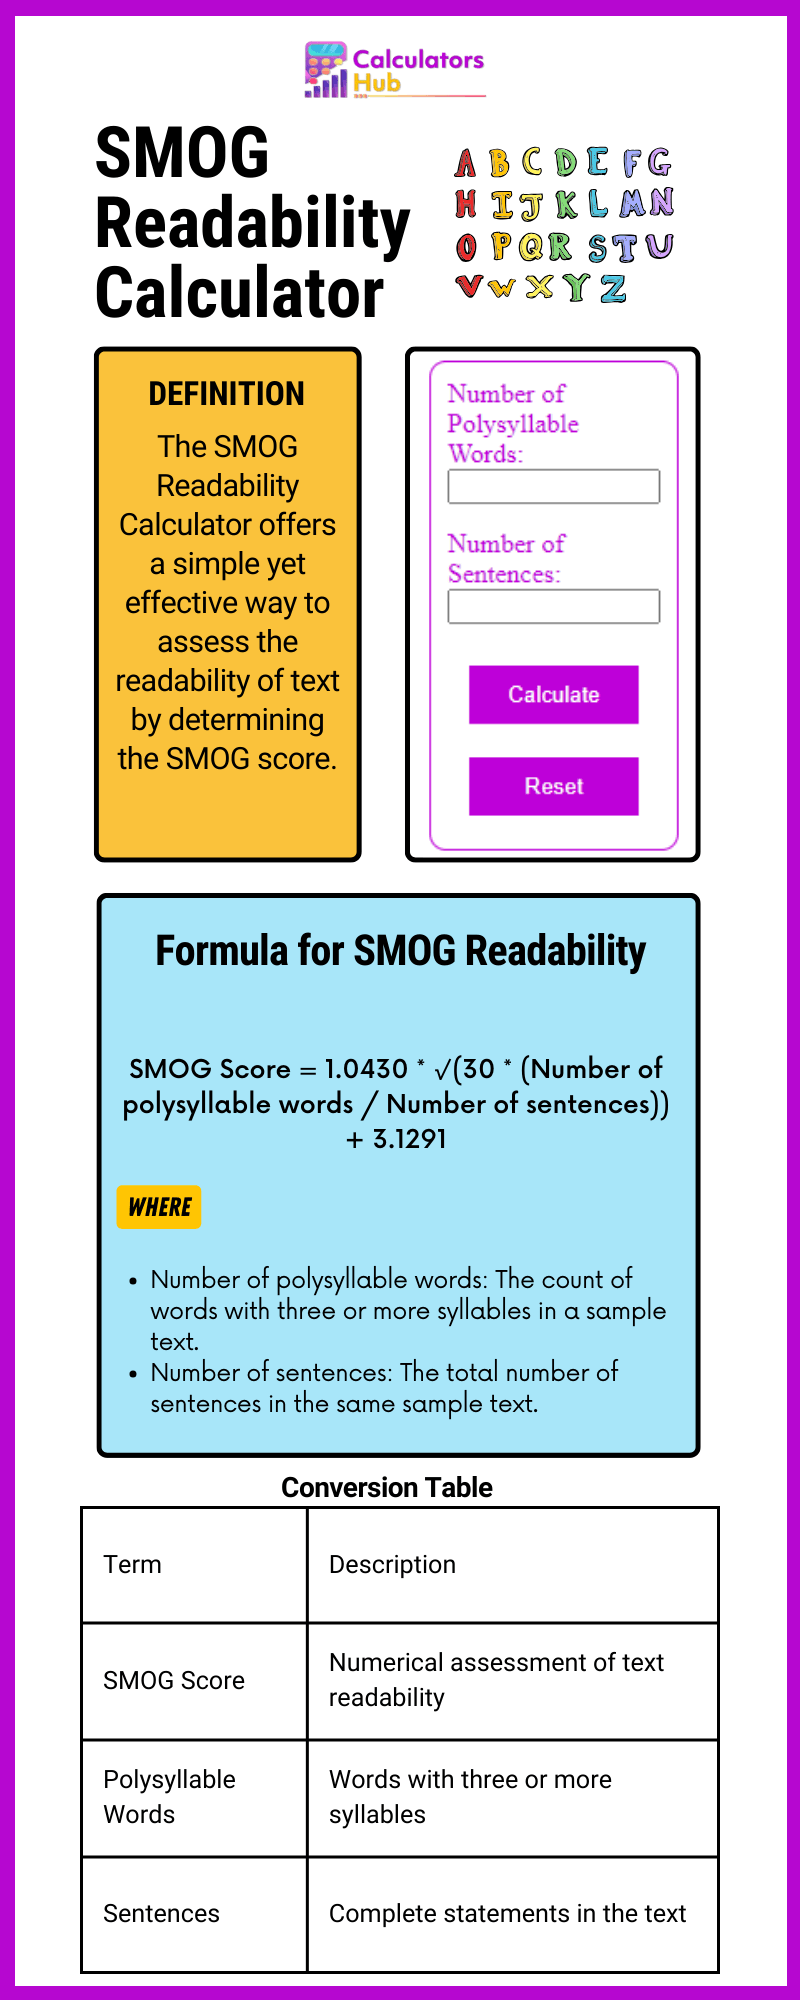 SMOG Readability Calculator